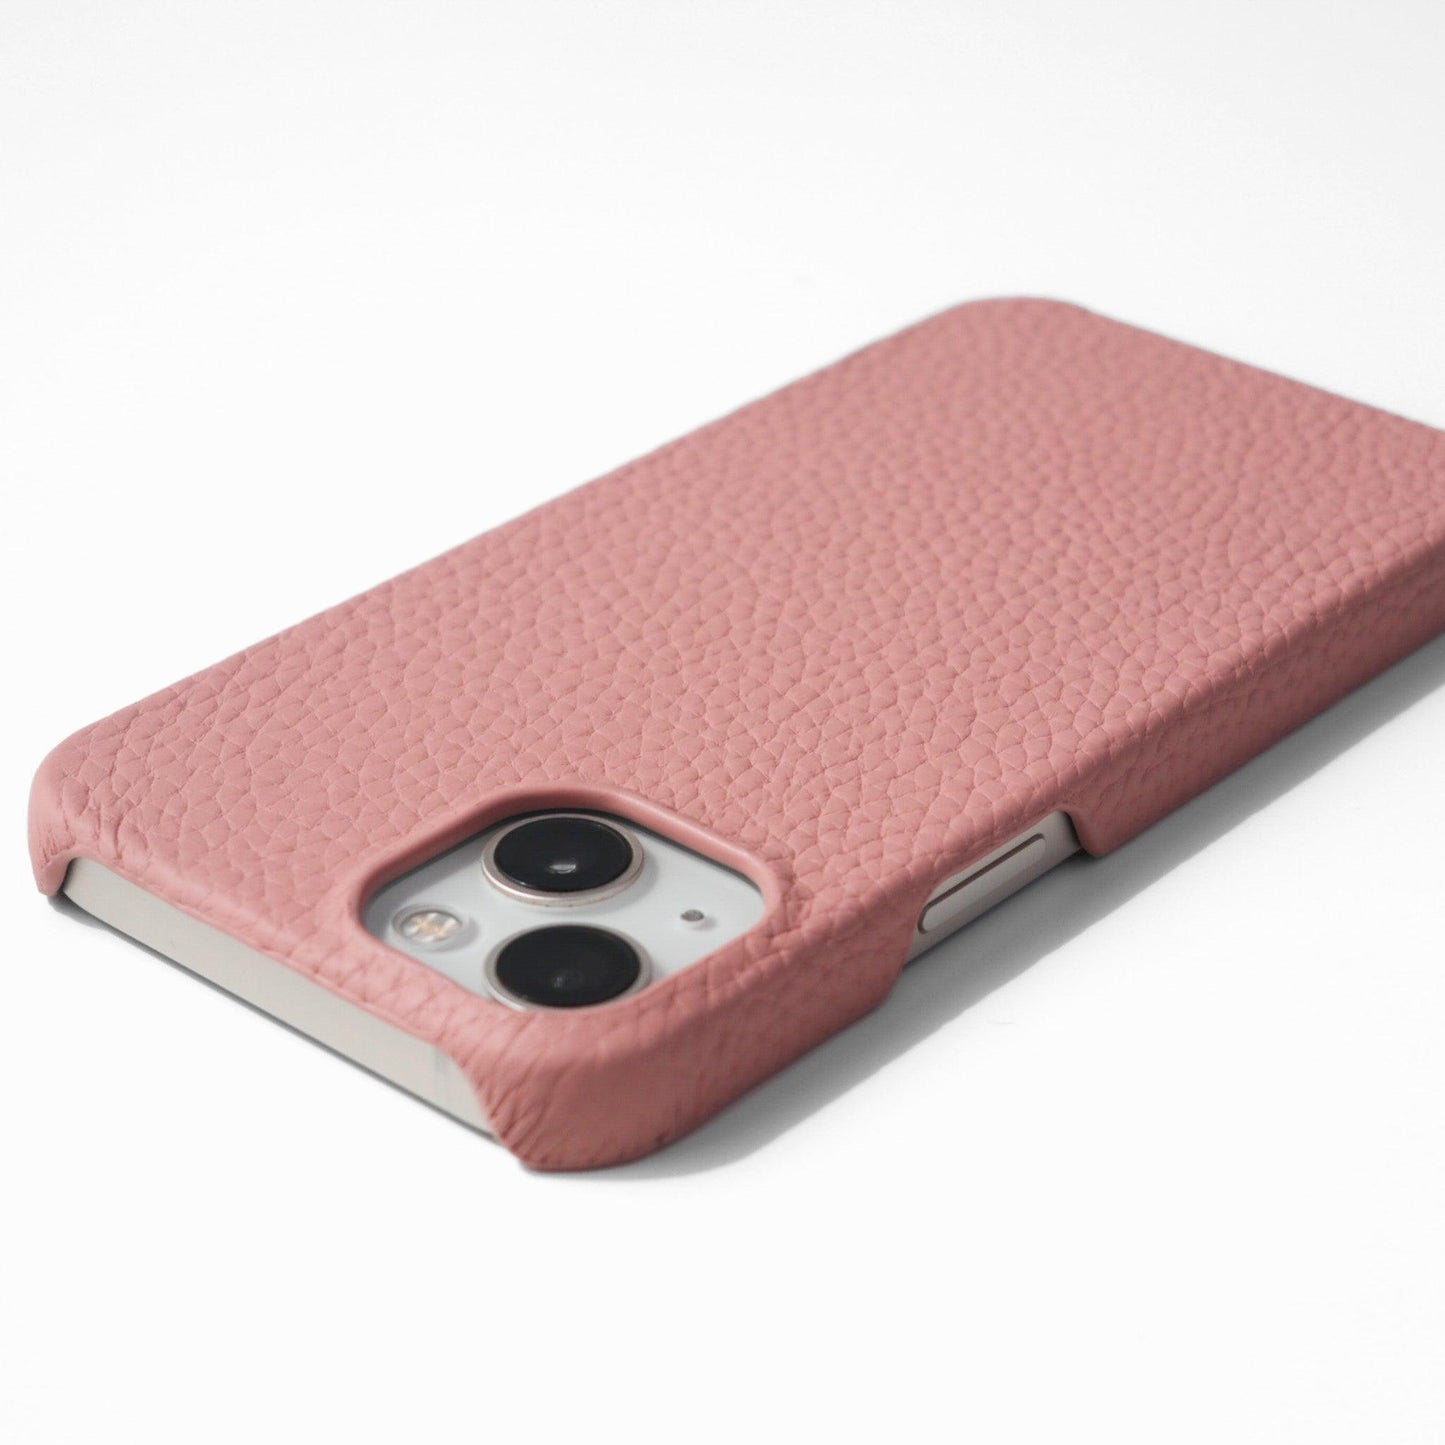 iPhone Thin Case - Blush Pink